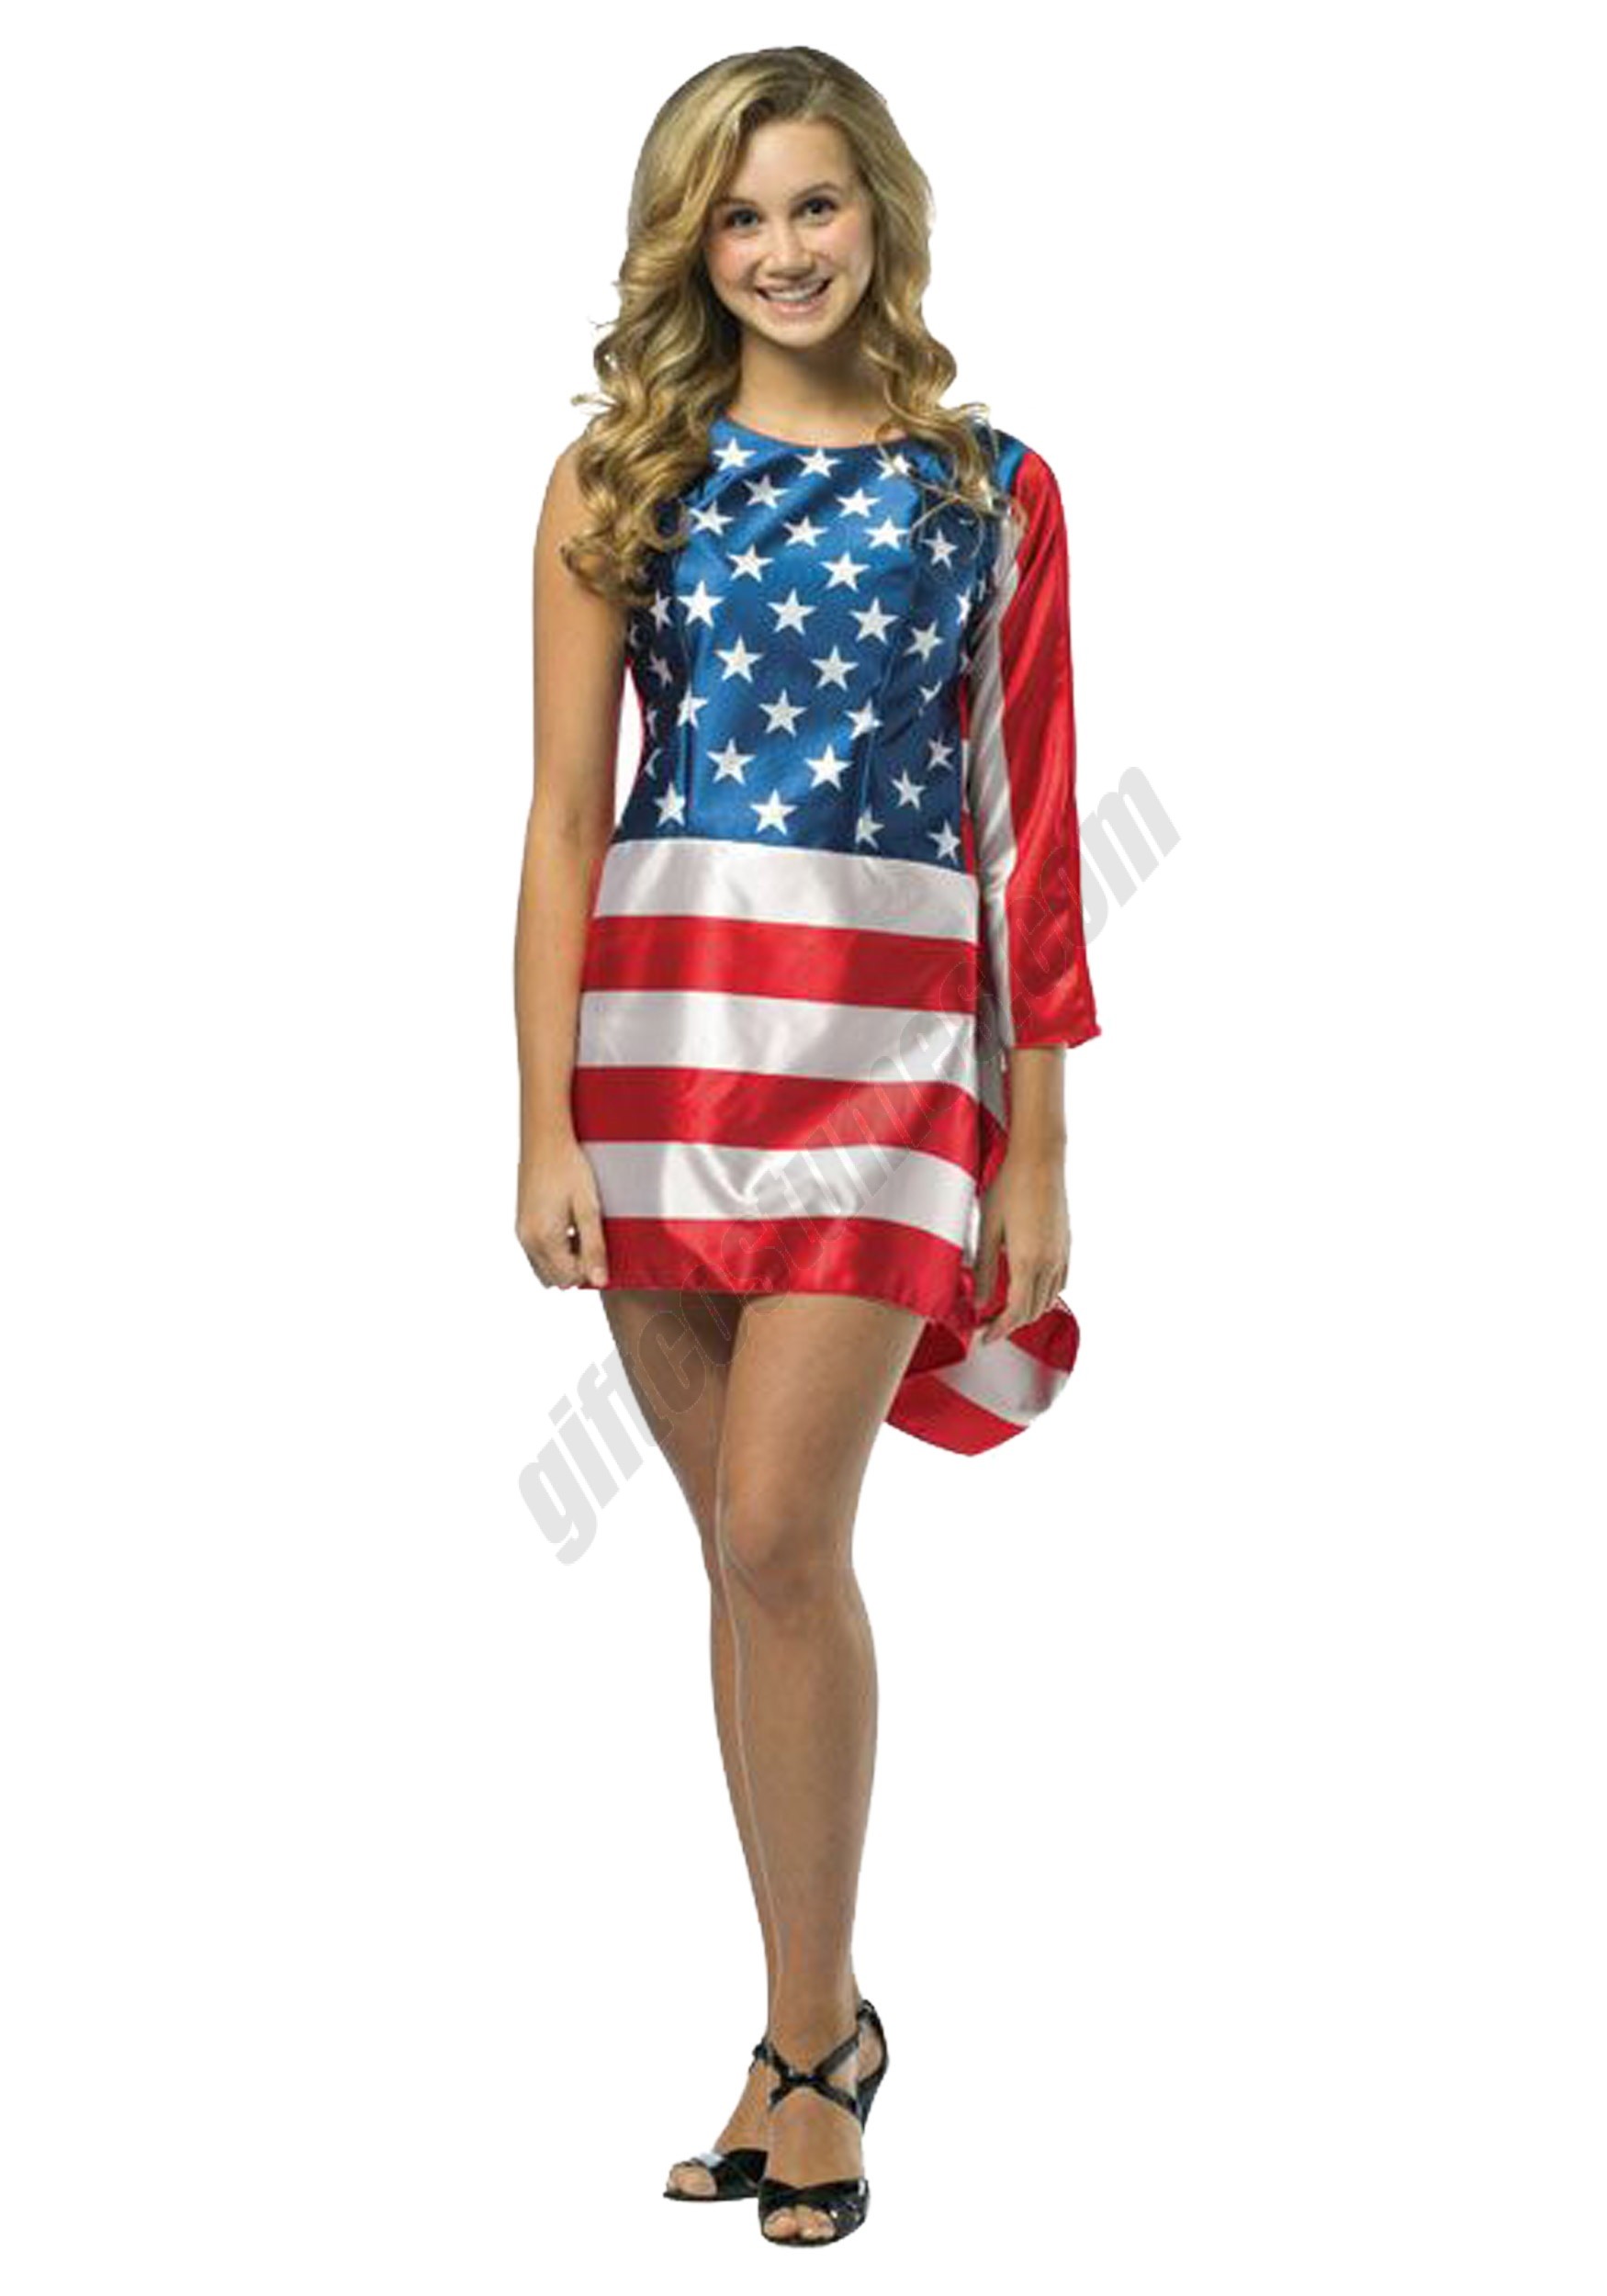 Teen Flag Costume Dress Promotions - Teen Flag Costume Dress Promotions